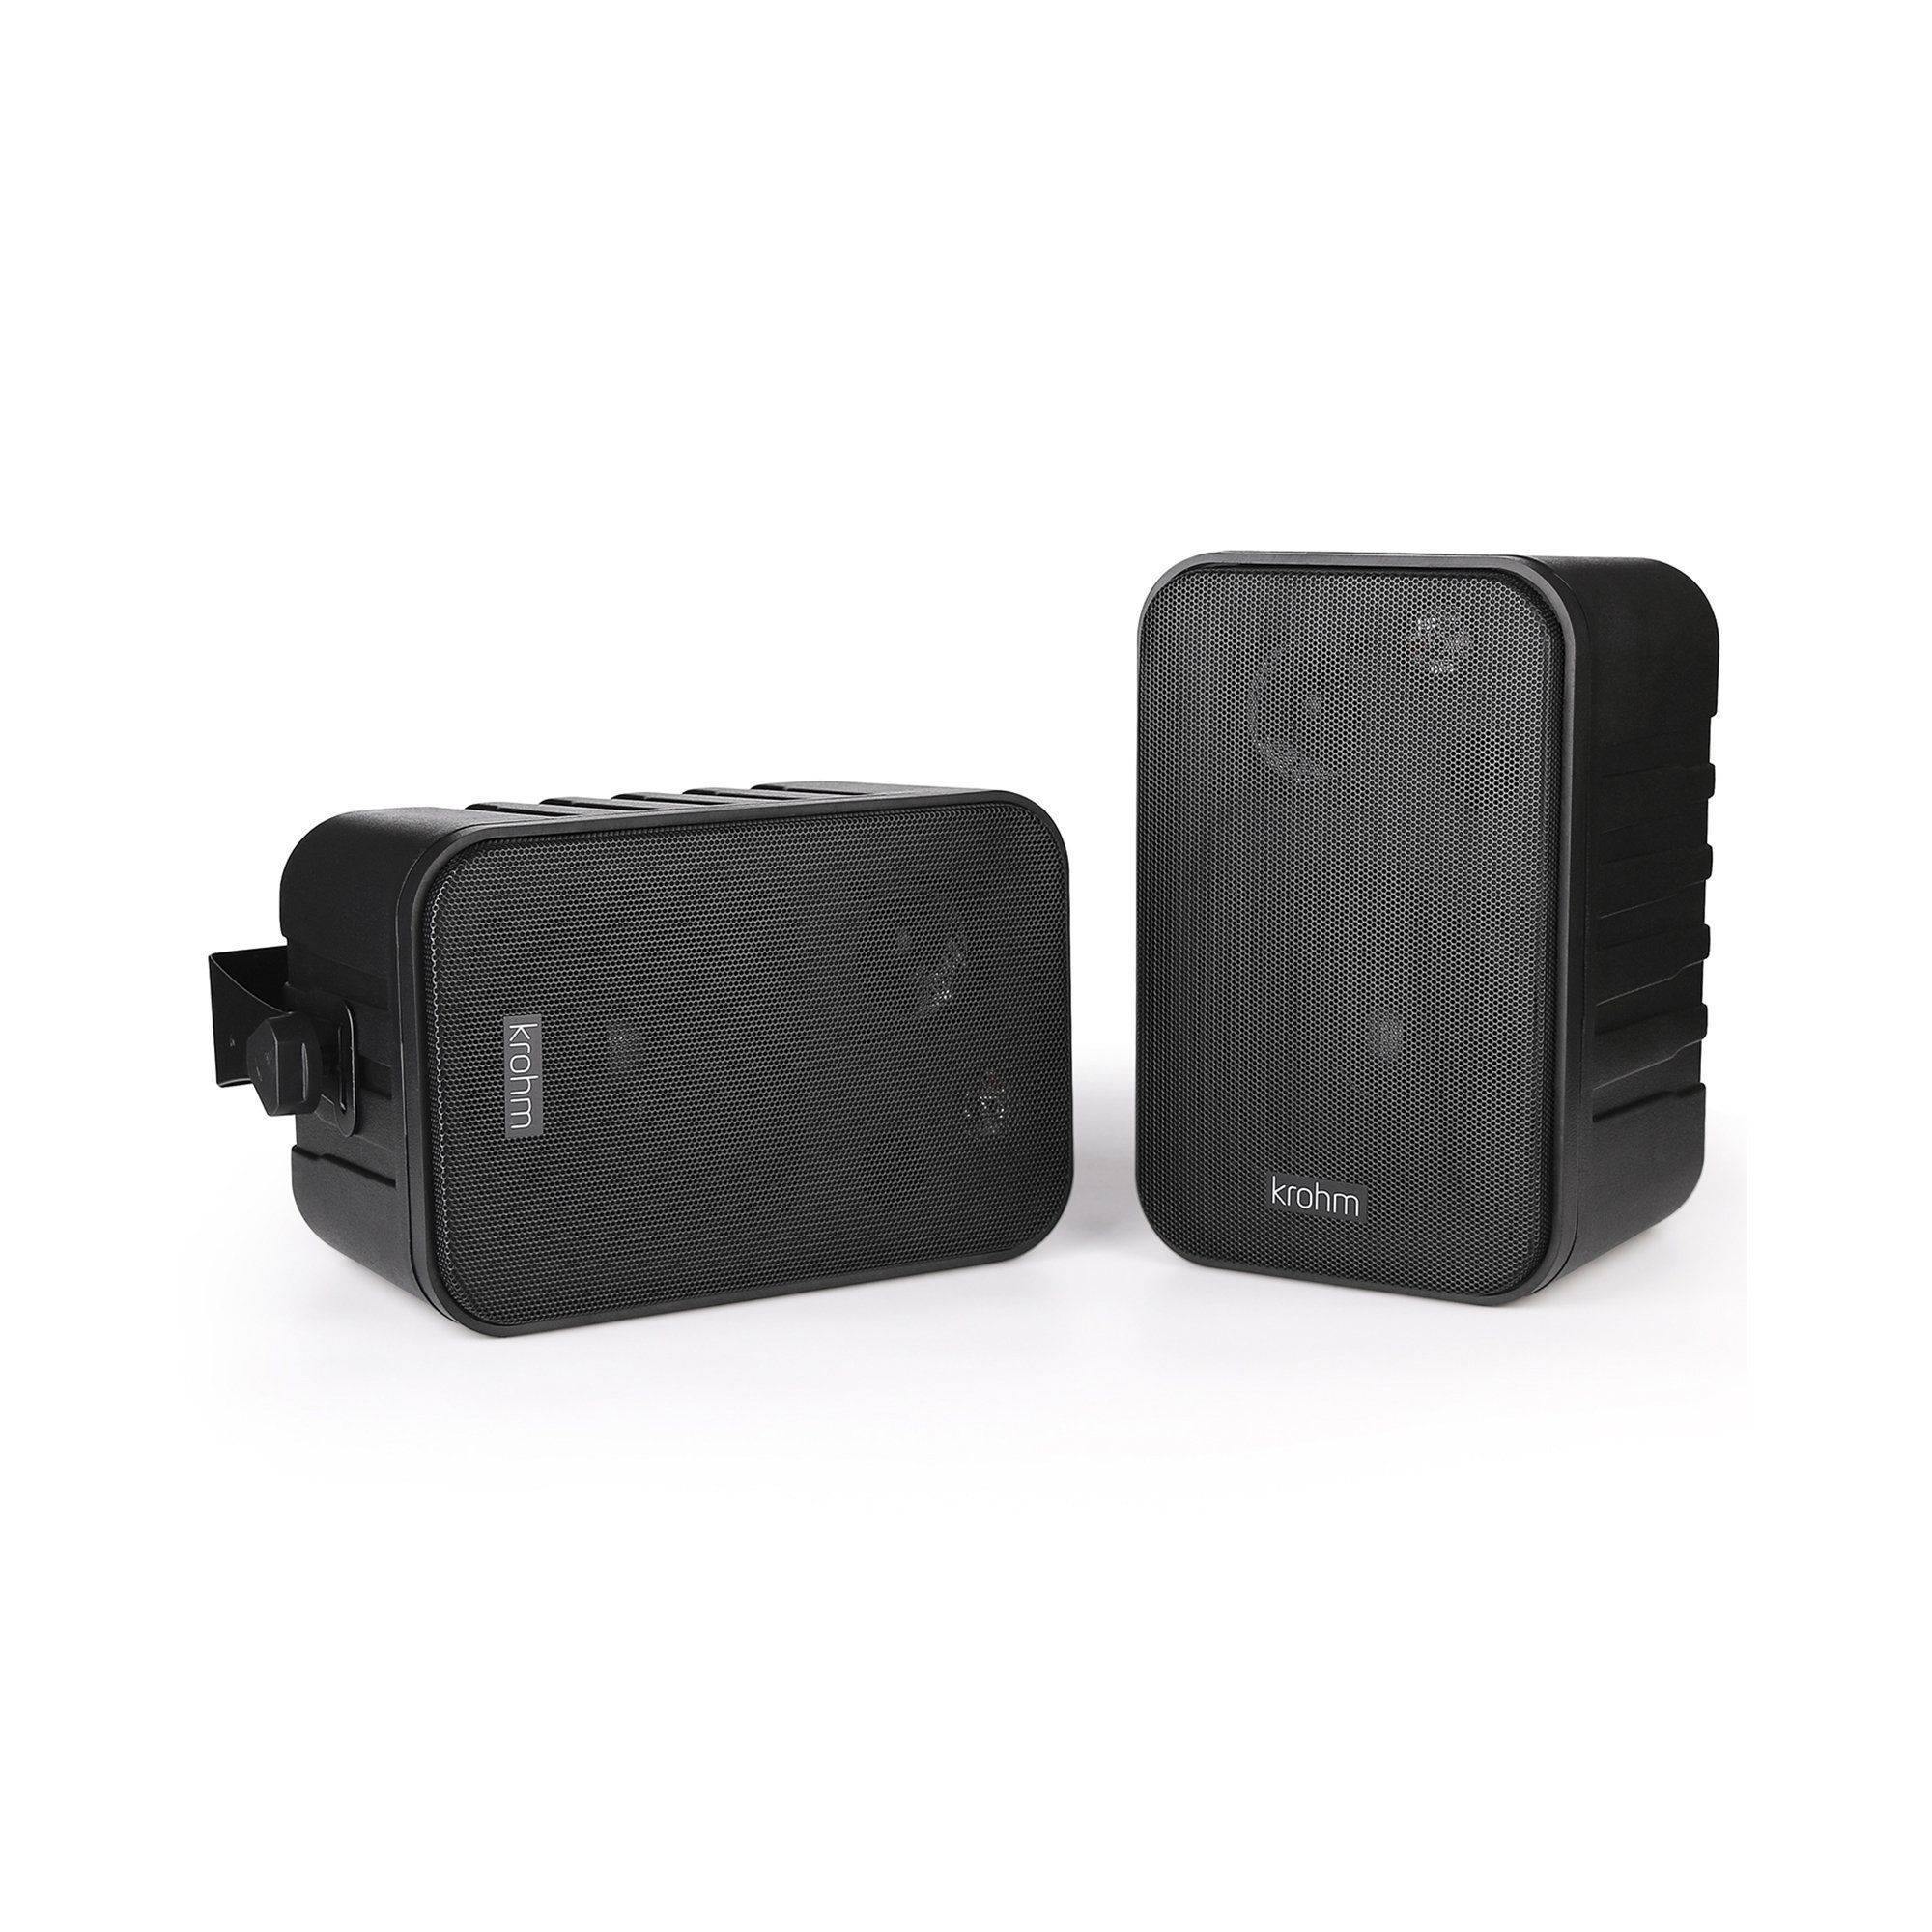 Krohm Bluetooth Wireless Indoor/Outdoor Speakers (Black-Pair) - Dti Direct USA